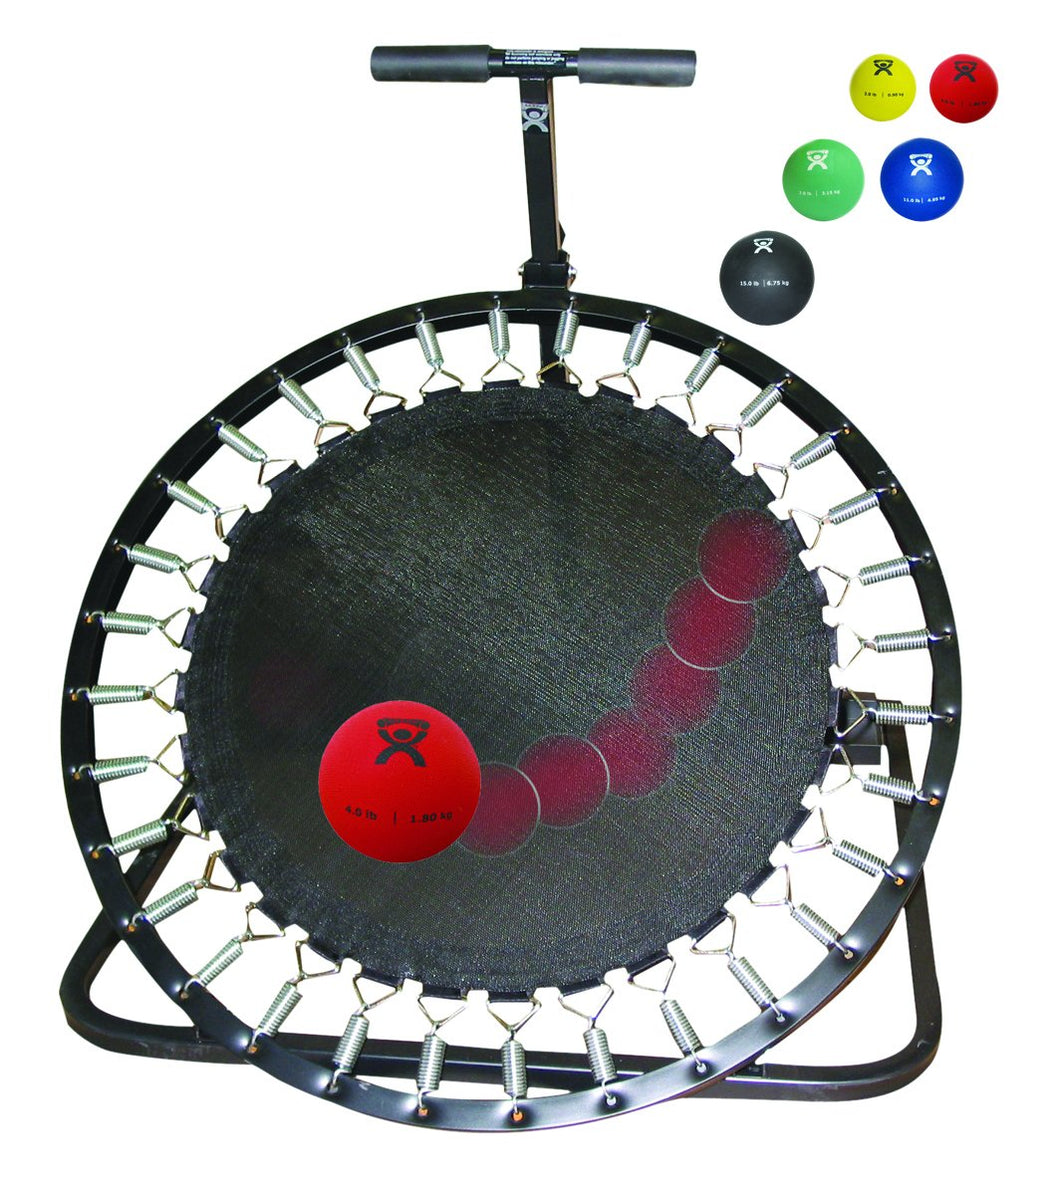 Adjustable Ball Rebounder - Set with Circular Rebounder, 1-tier Horizontal Plastic Rack, 5-balls (1 each: 2,4,7,11,15 lb)